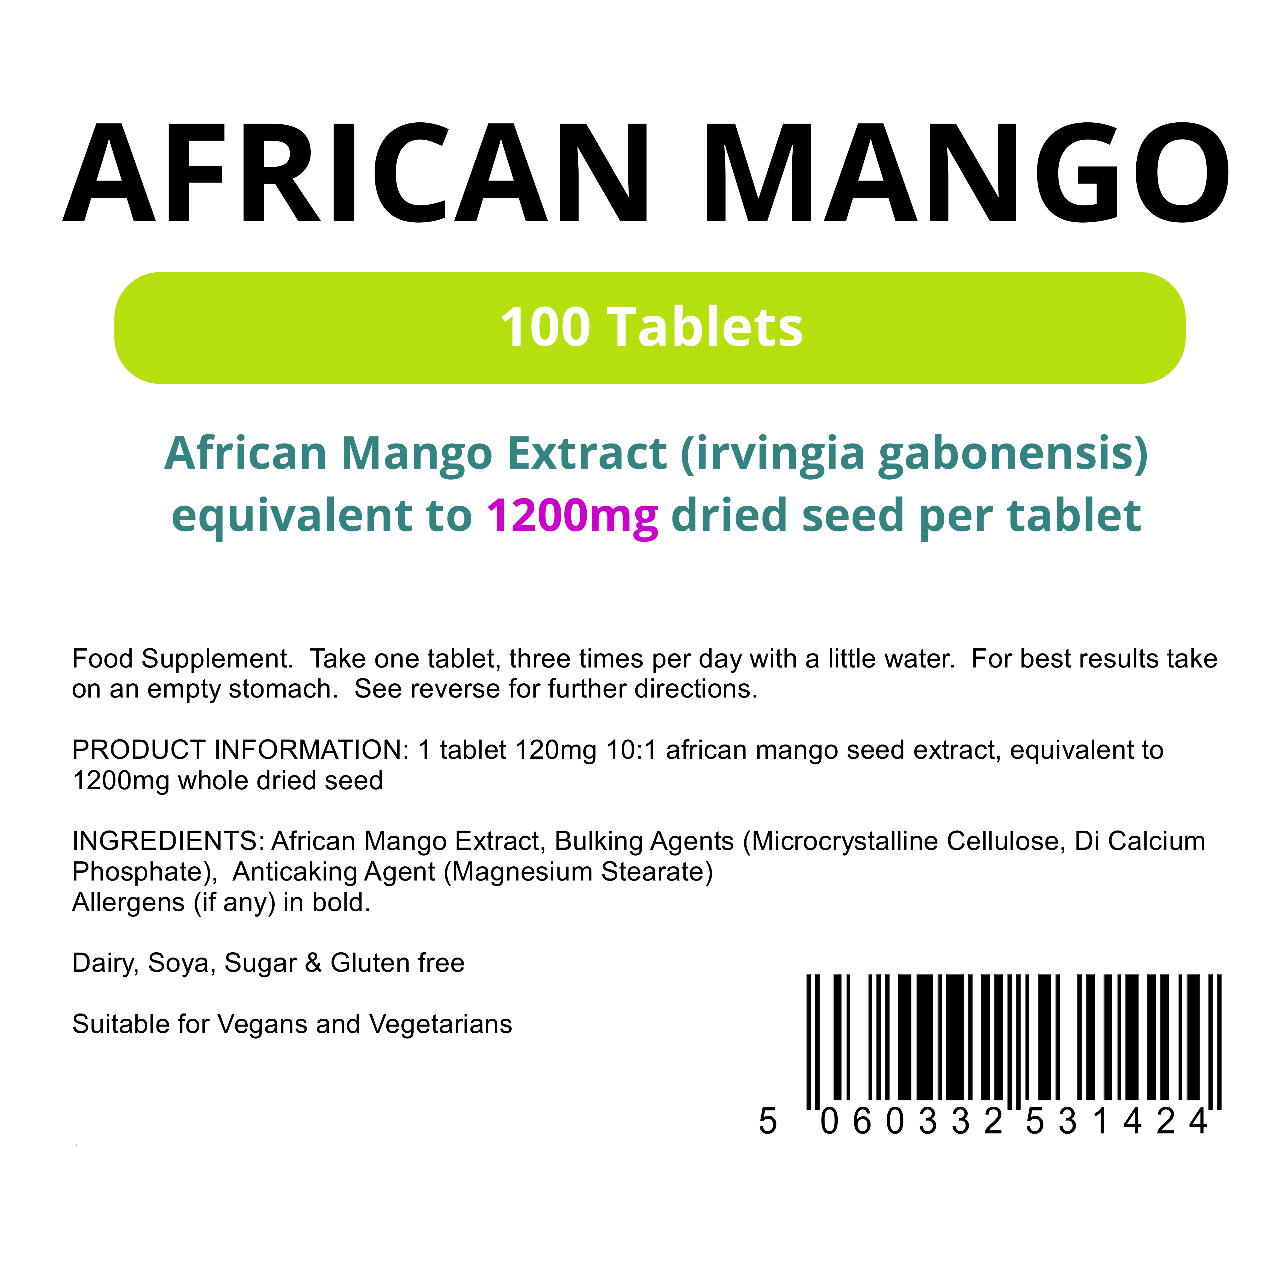 African Mango Ingredients